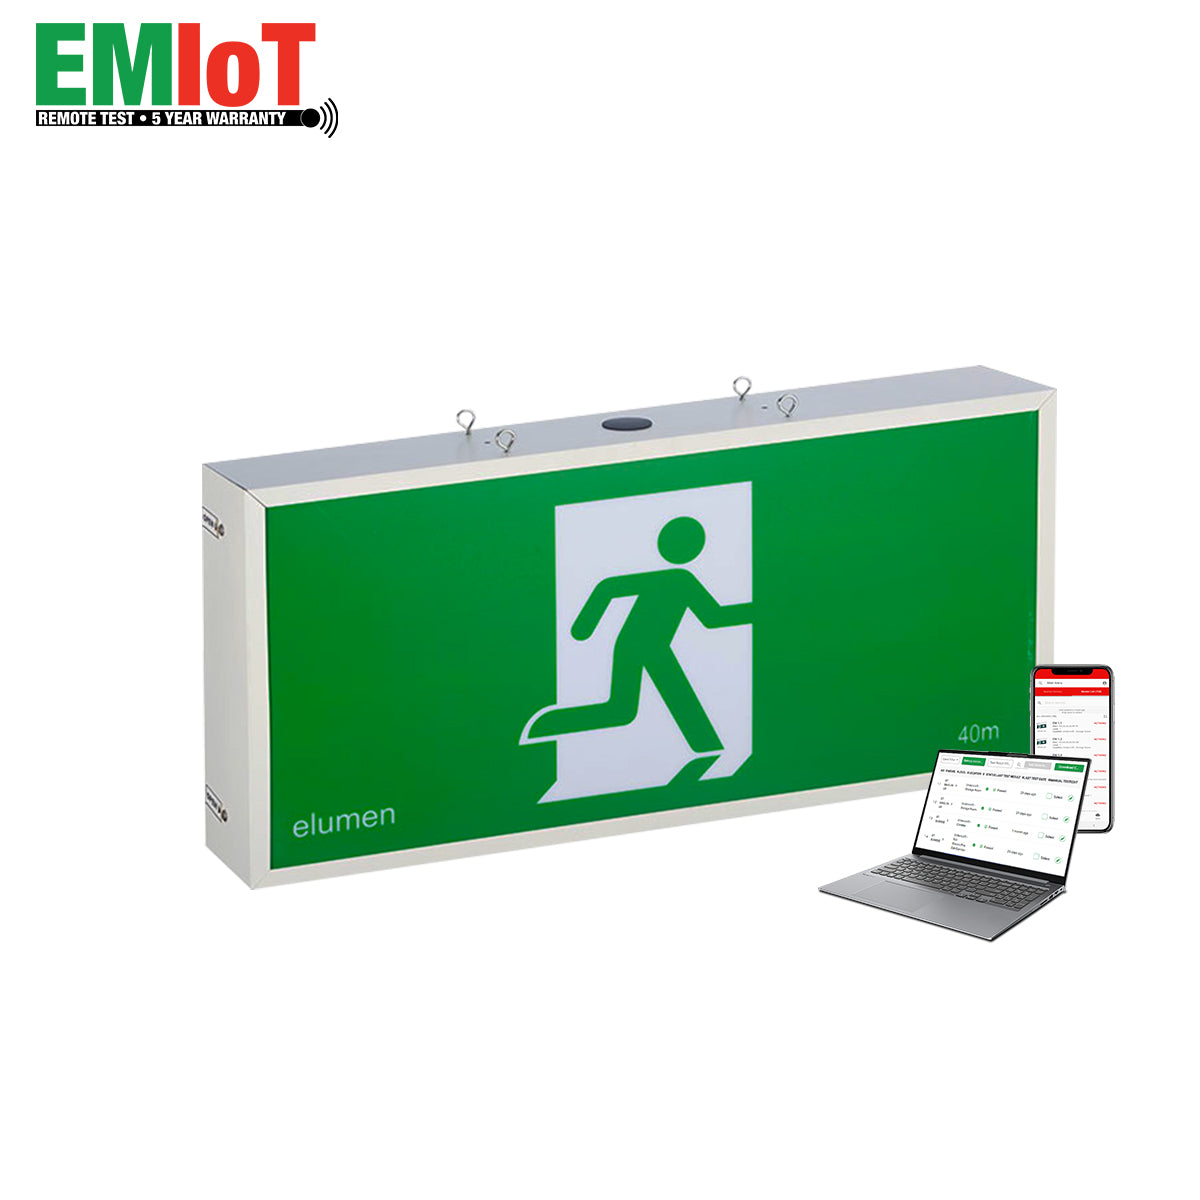 LED Jumbo Exit Light - Remote Test - Premium Exit & Emergency Lighting from elumen - Shop now at Firebox Australia